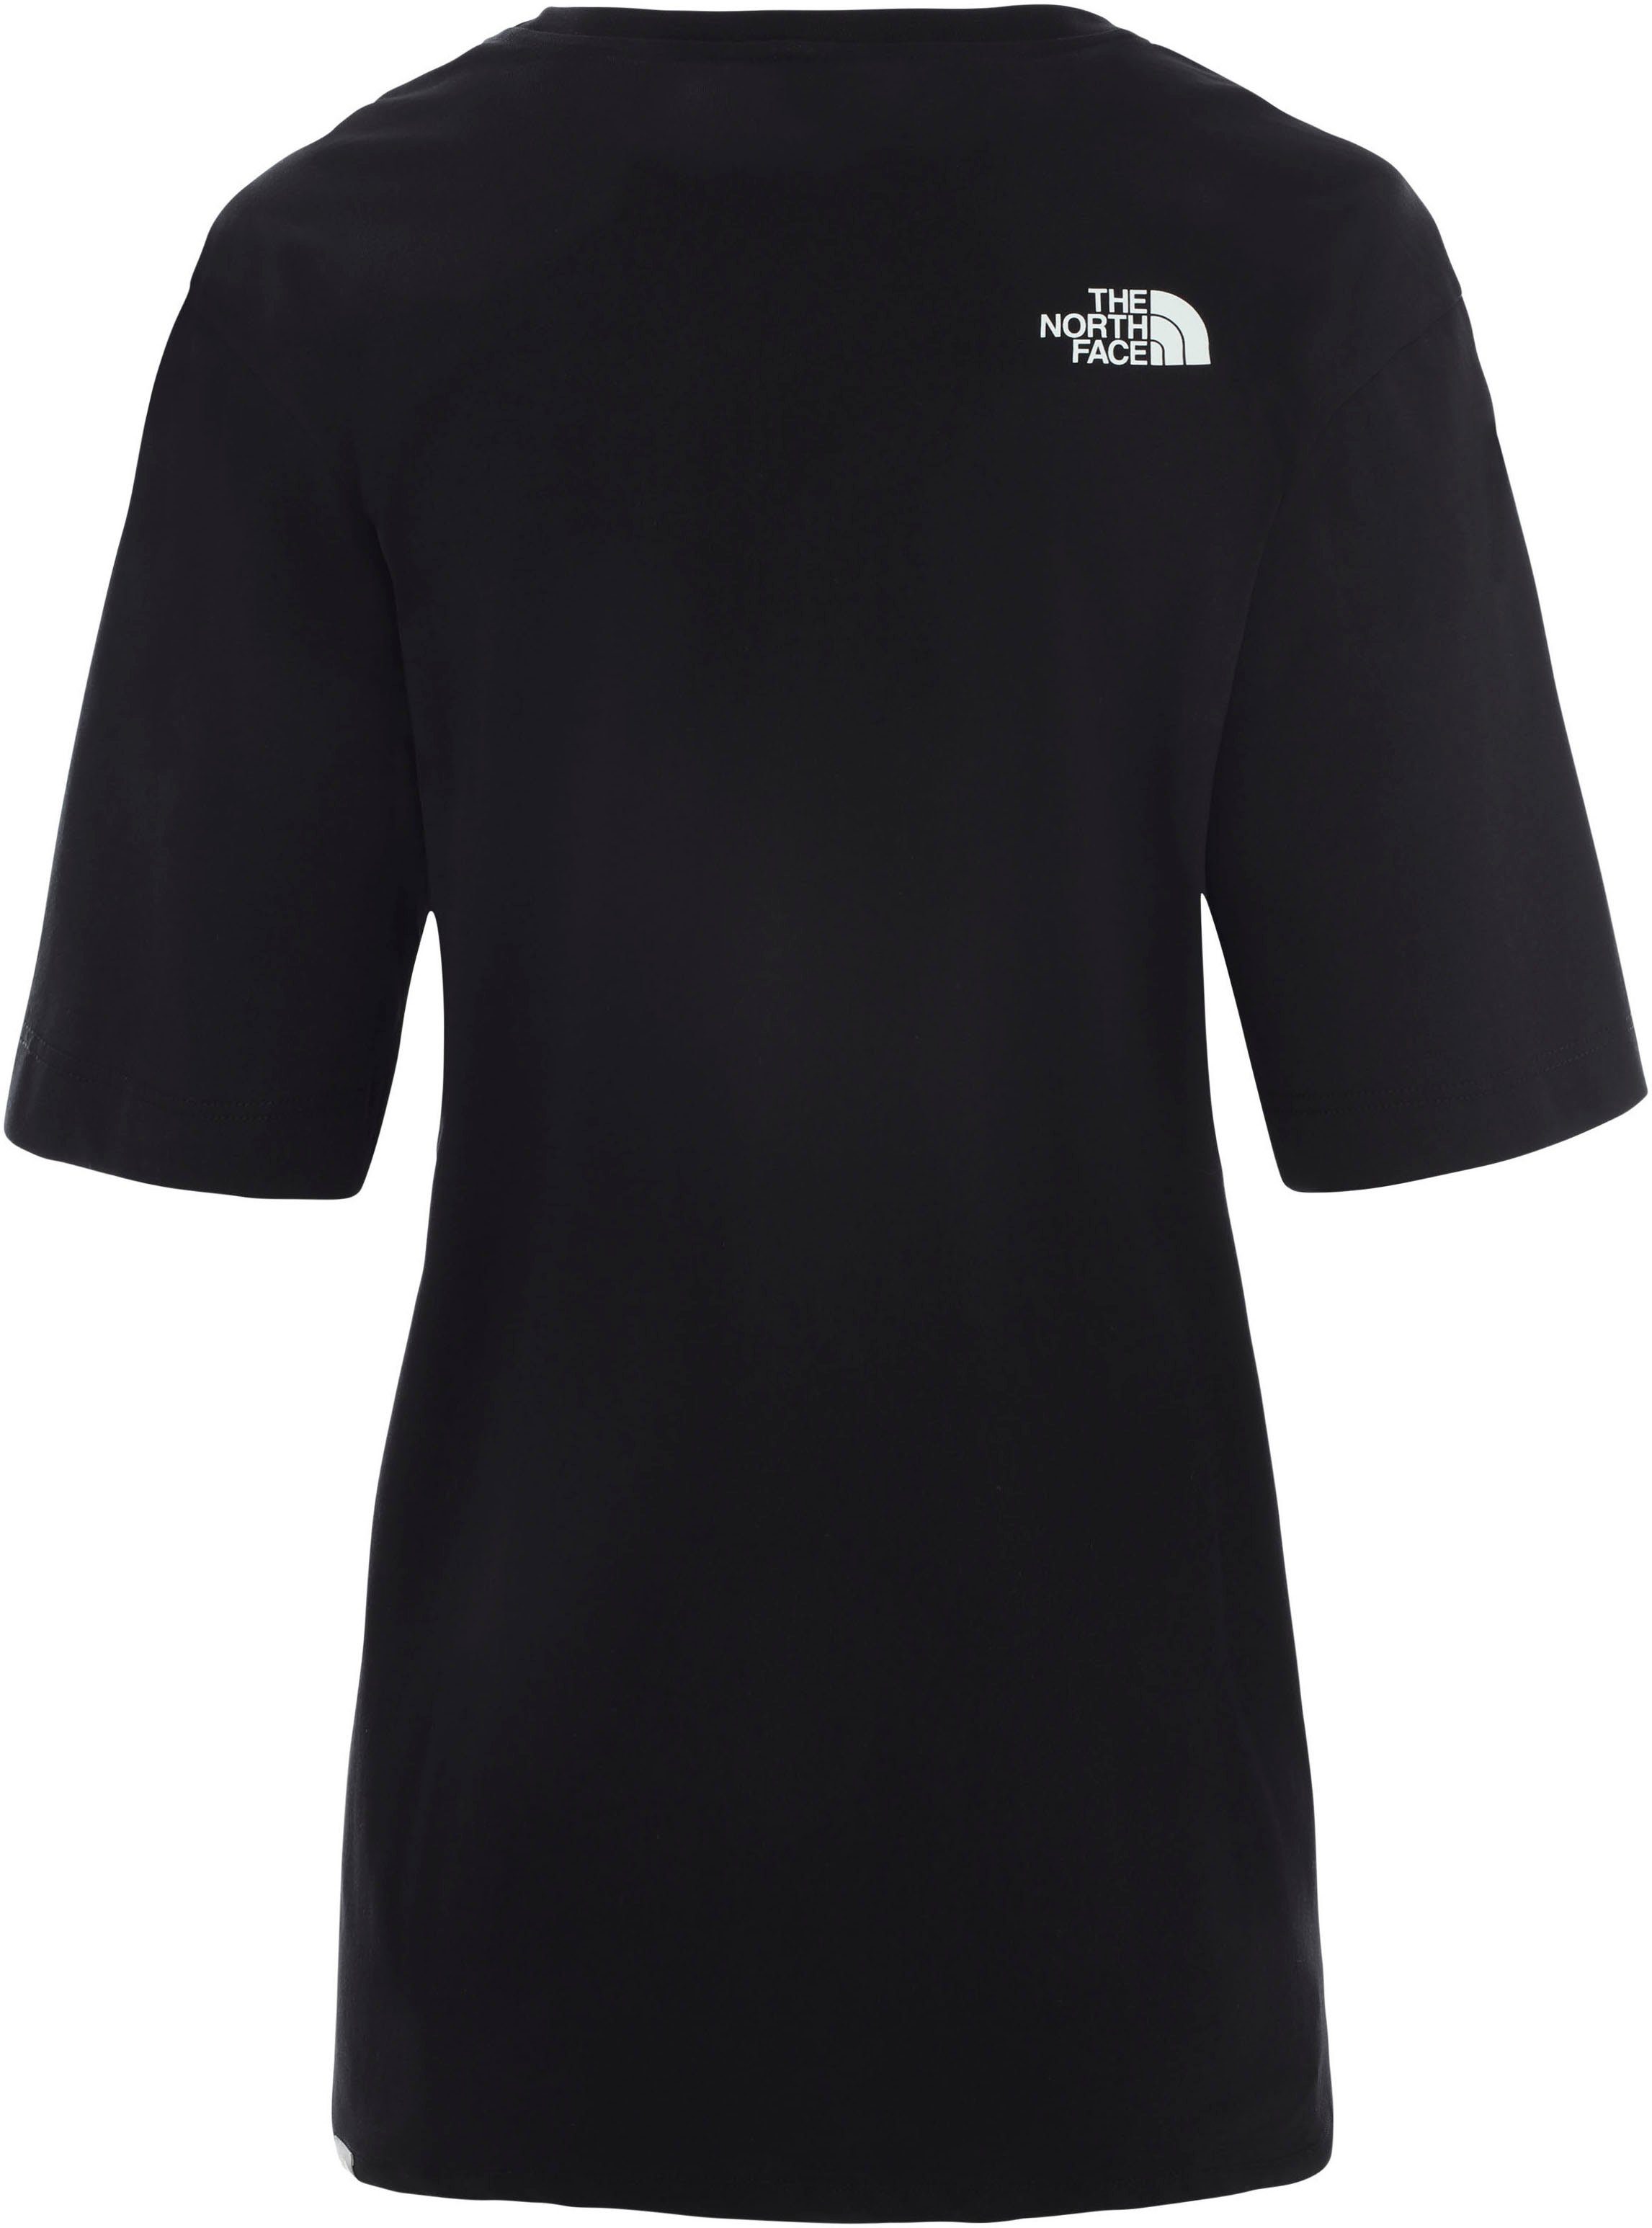 The EASY auf black T-Shirt mit W RELAXED TEE Brust Face Logodruck North der